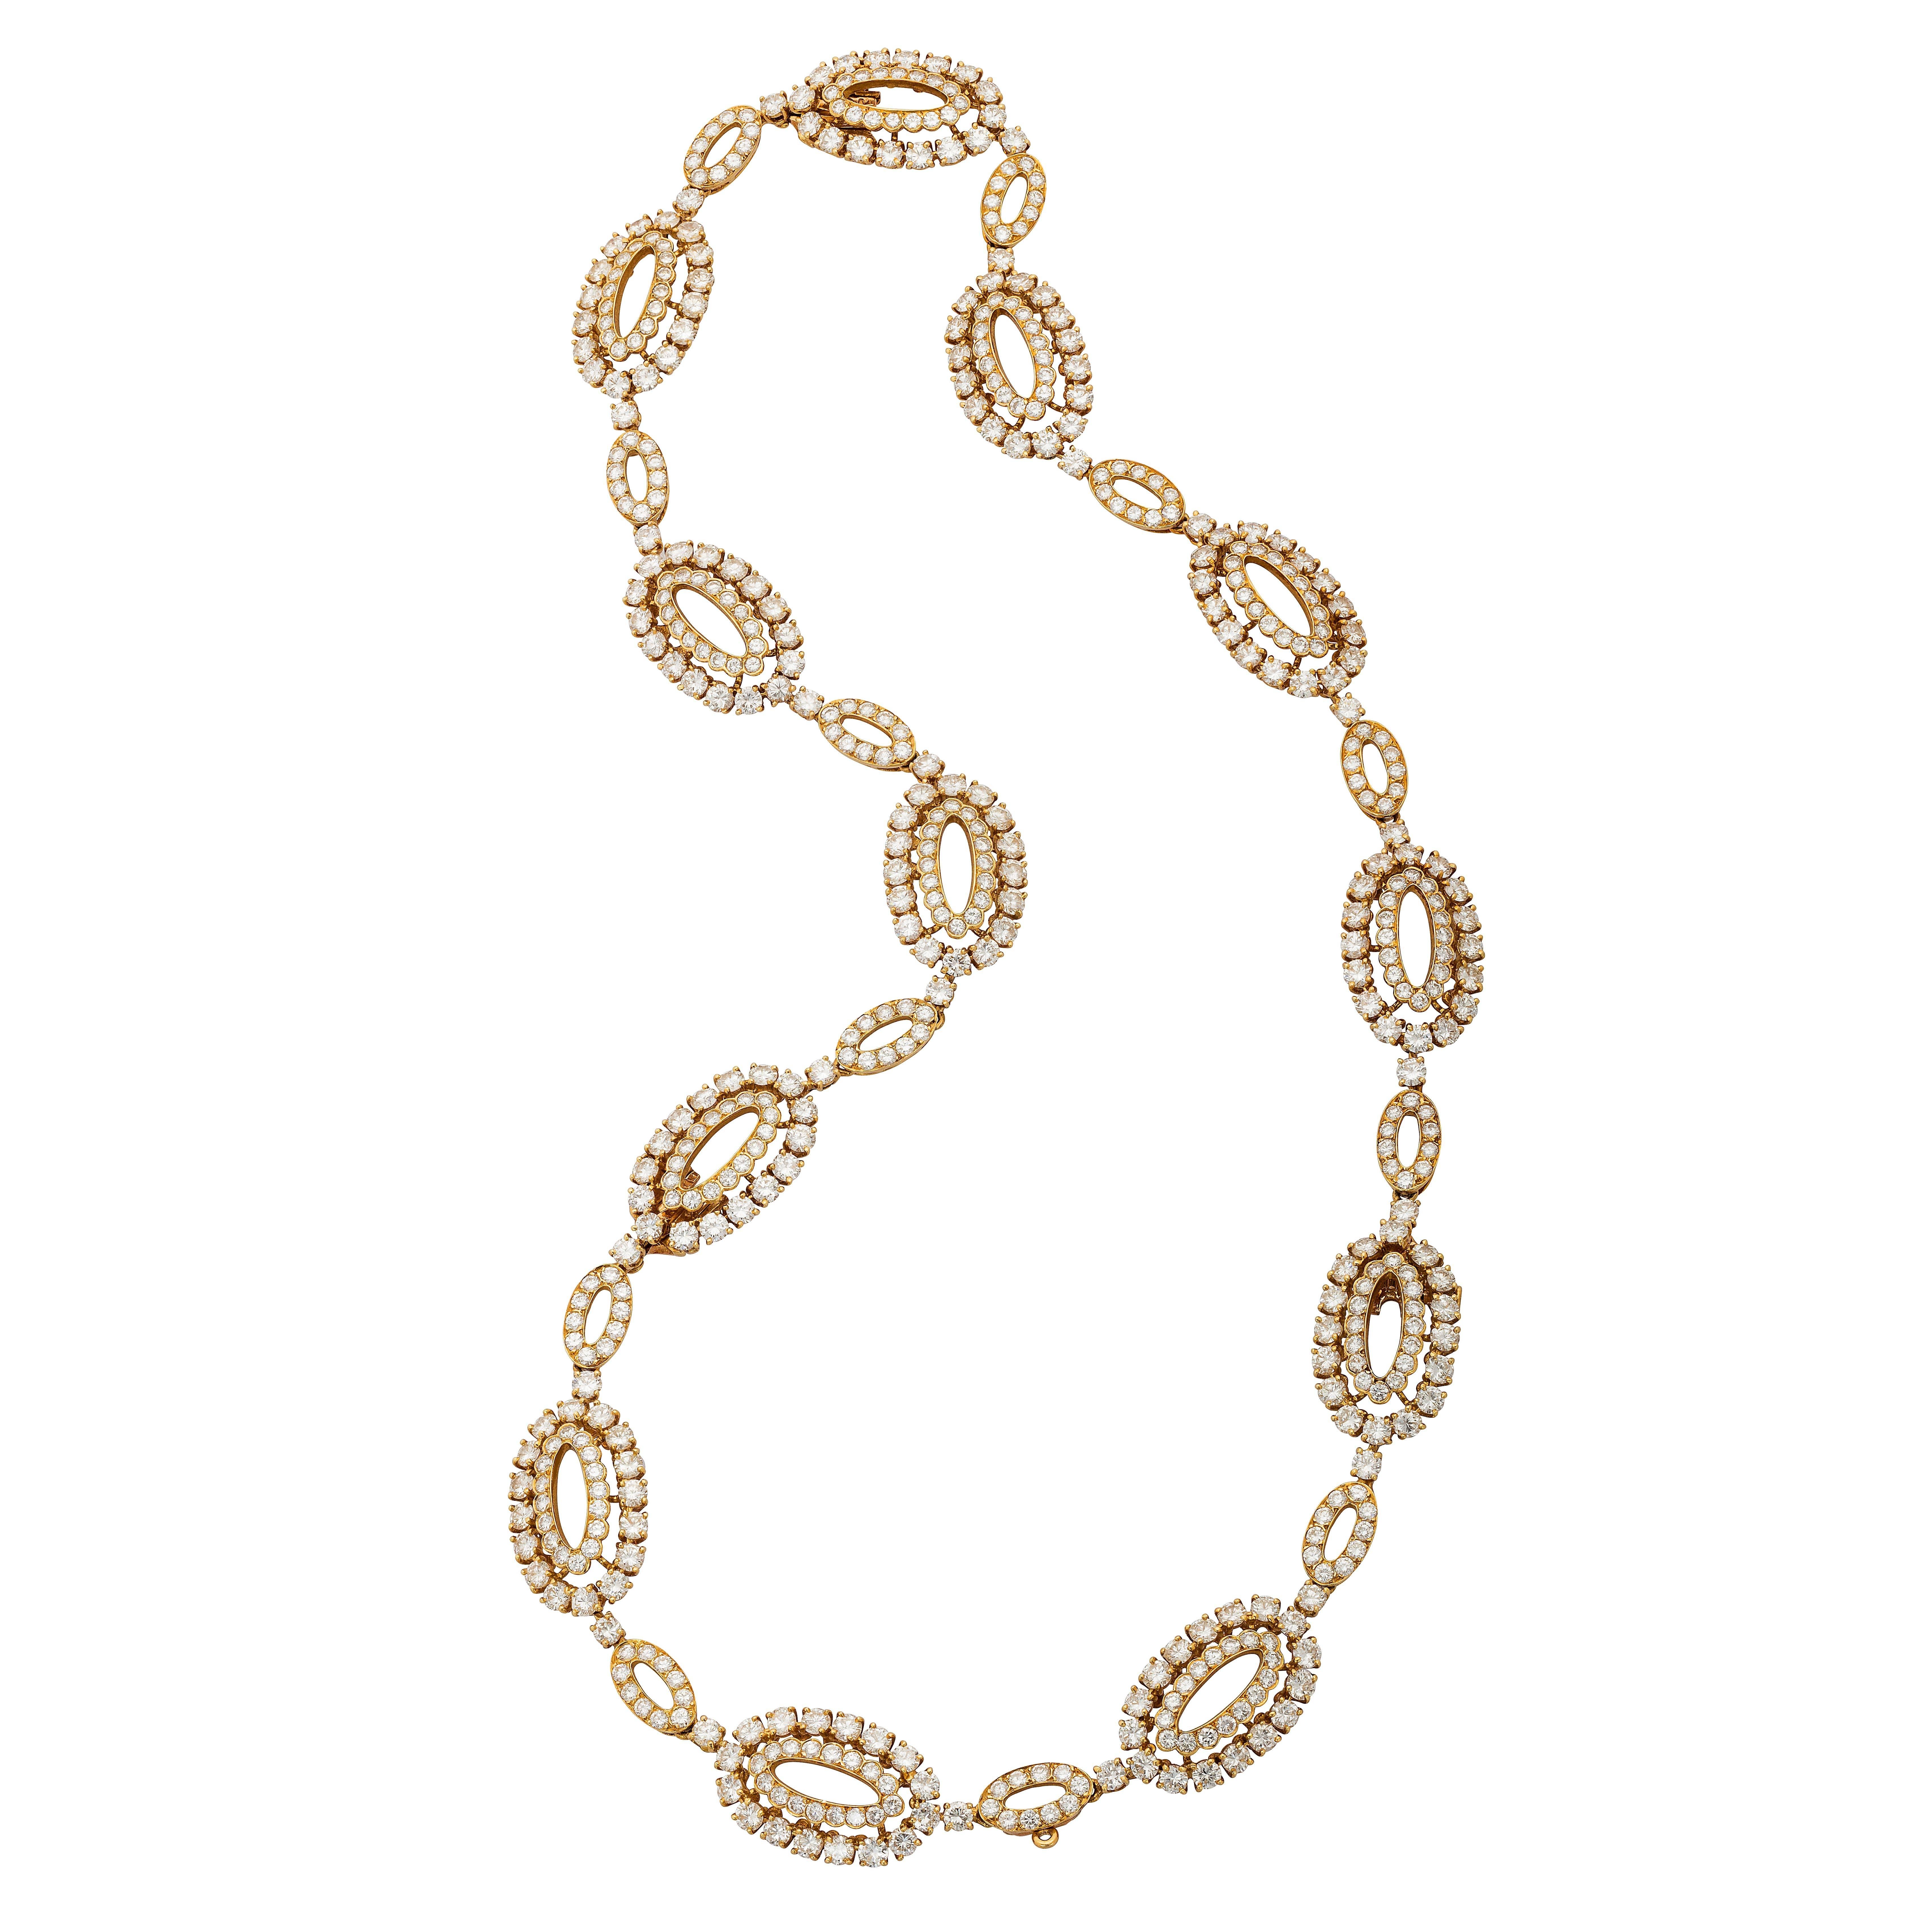 Round Cut Circa 1970 Van Cleef & Arpels Diamond Yellow Gold Necklace Earrings Parure Suite